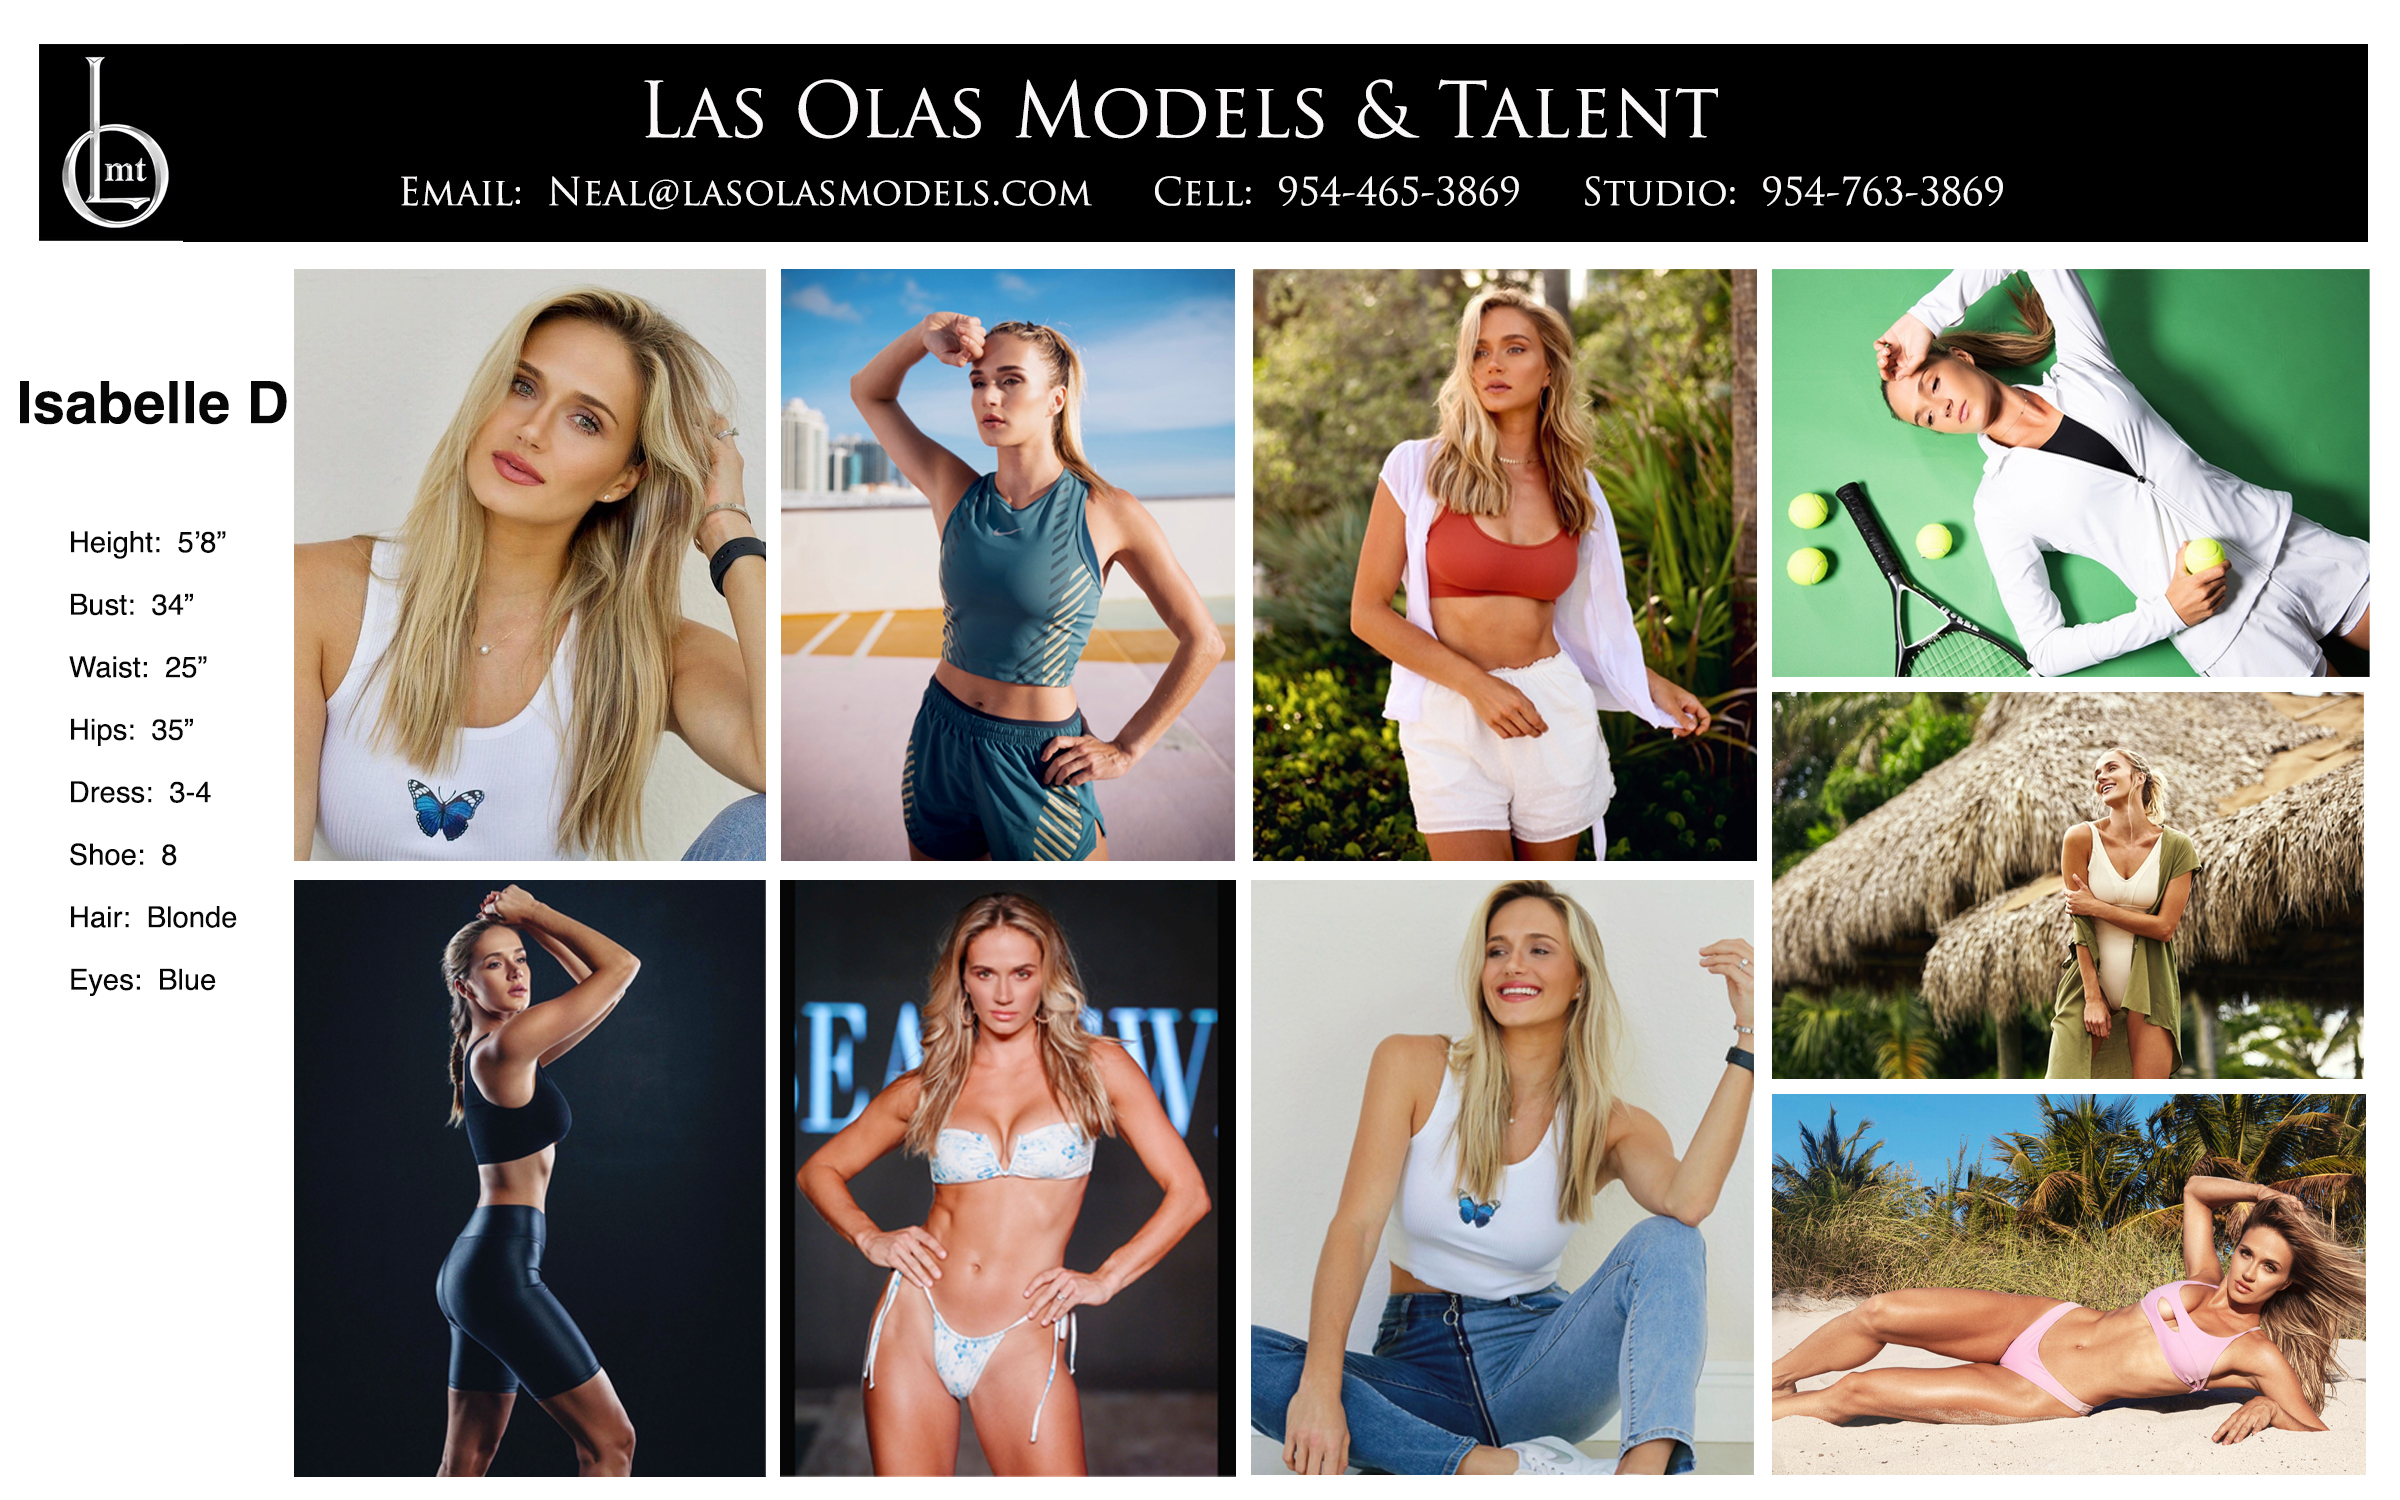 Models Fort Lauderdale Miami South Florida - Print Video Commercial Catalog - Las Olas Models & Talent - Isbelle D Comp